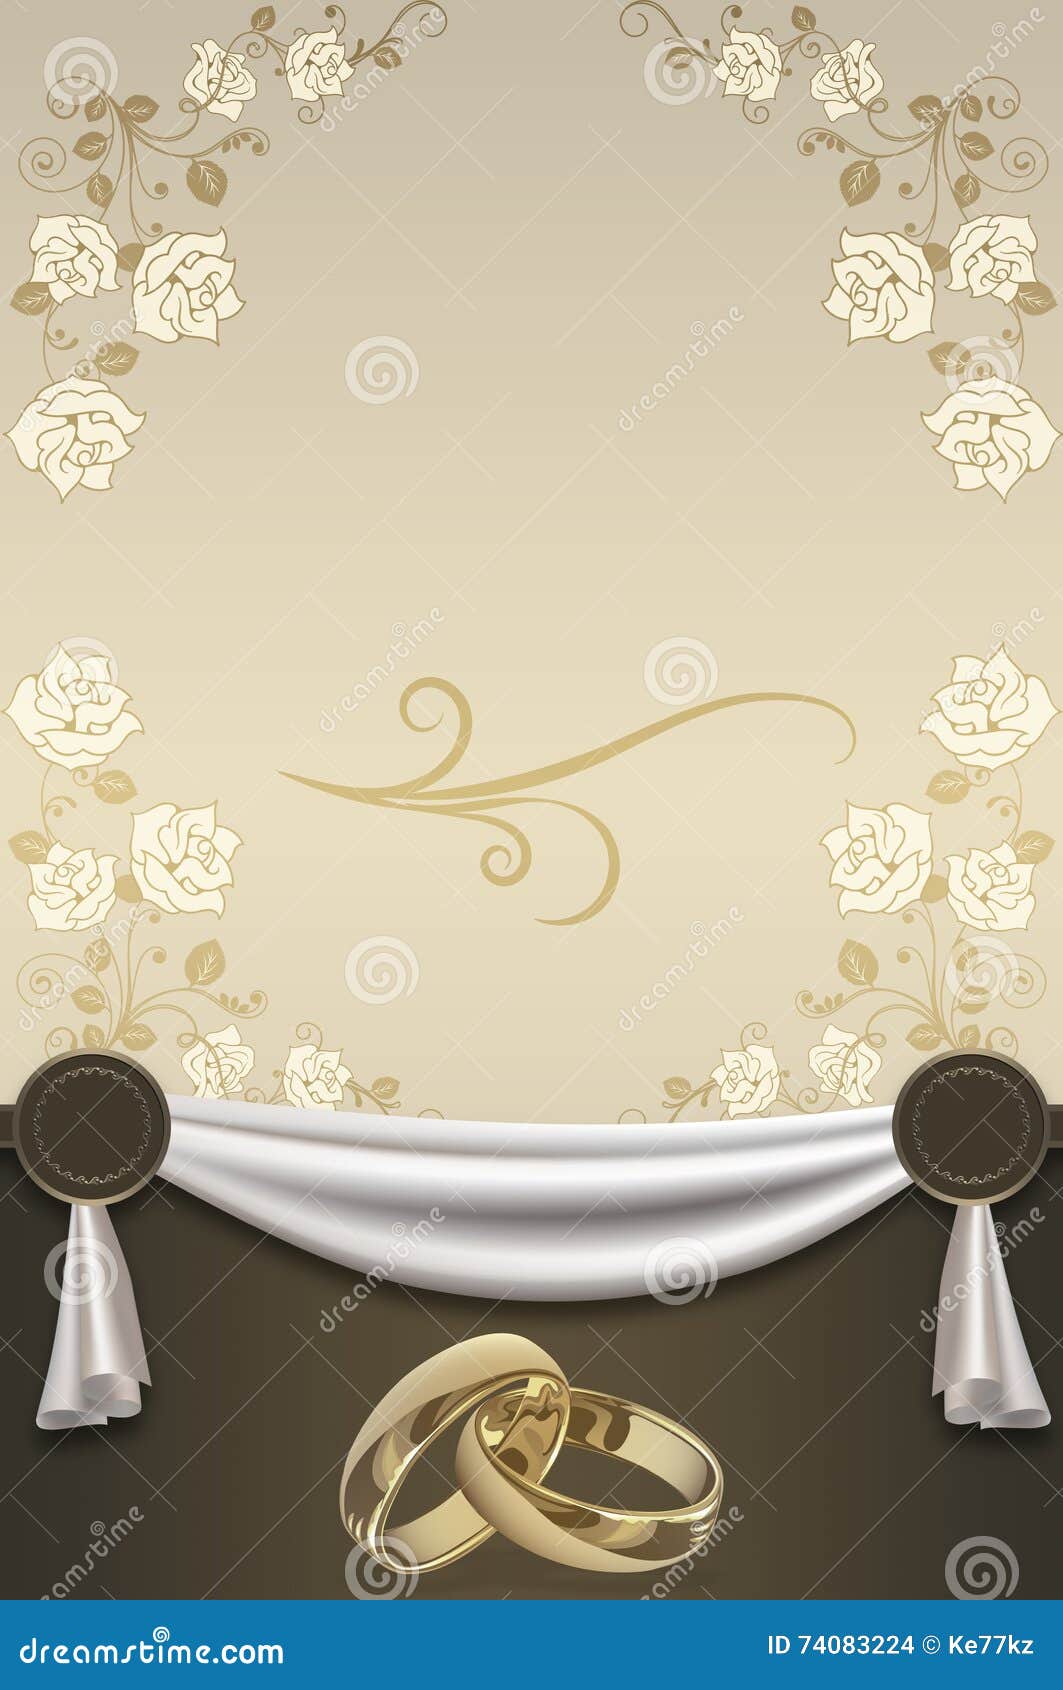 Wedding Invitation Card Design. Stock Illustration - Illustration of ...